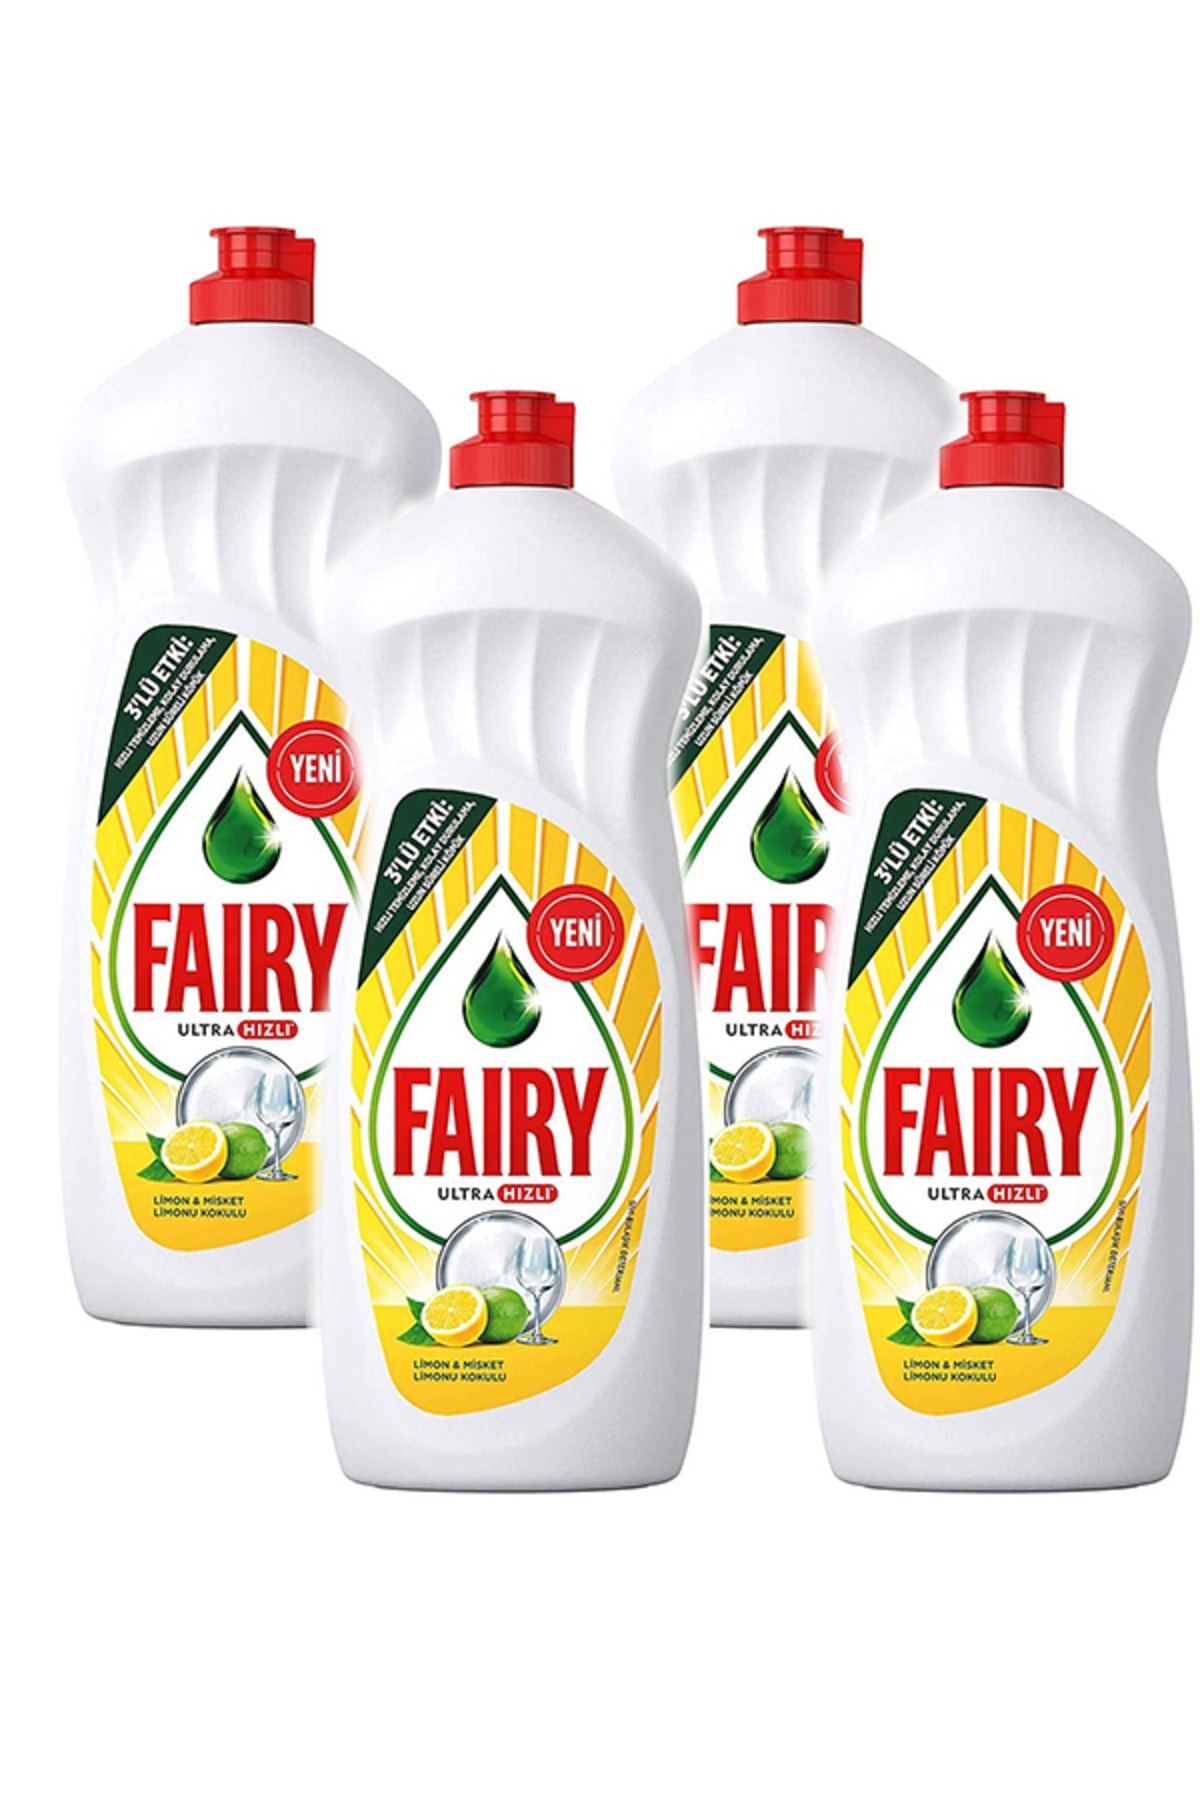 Fairy Ultra Hızlı Limon & Misket Limonu Kokulu 650 ml, 4 Adet